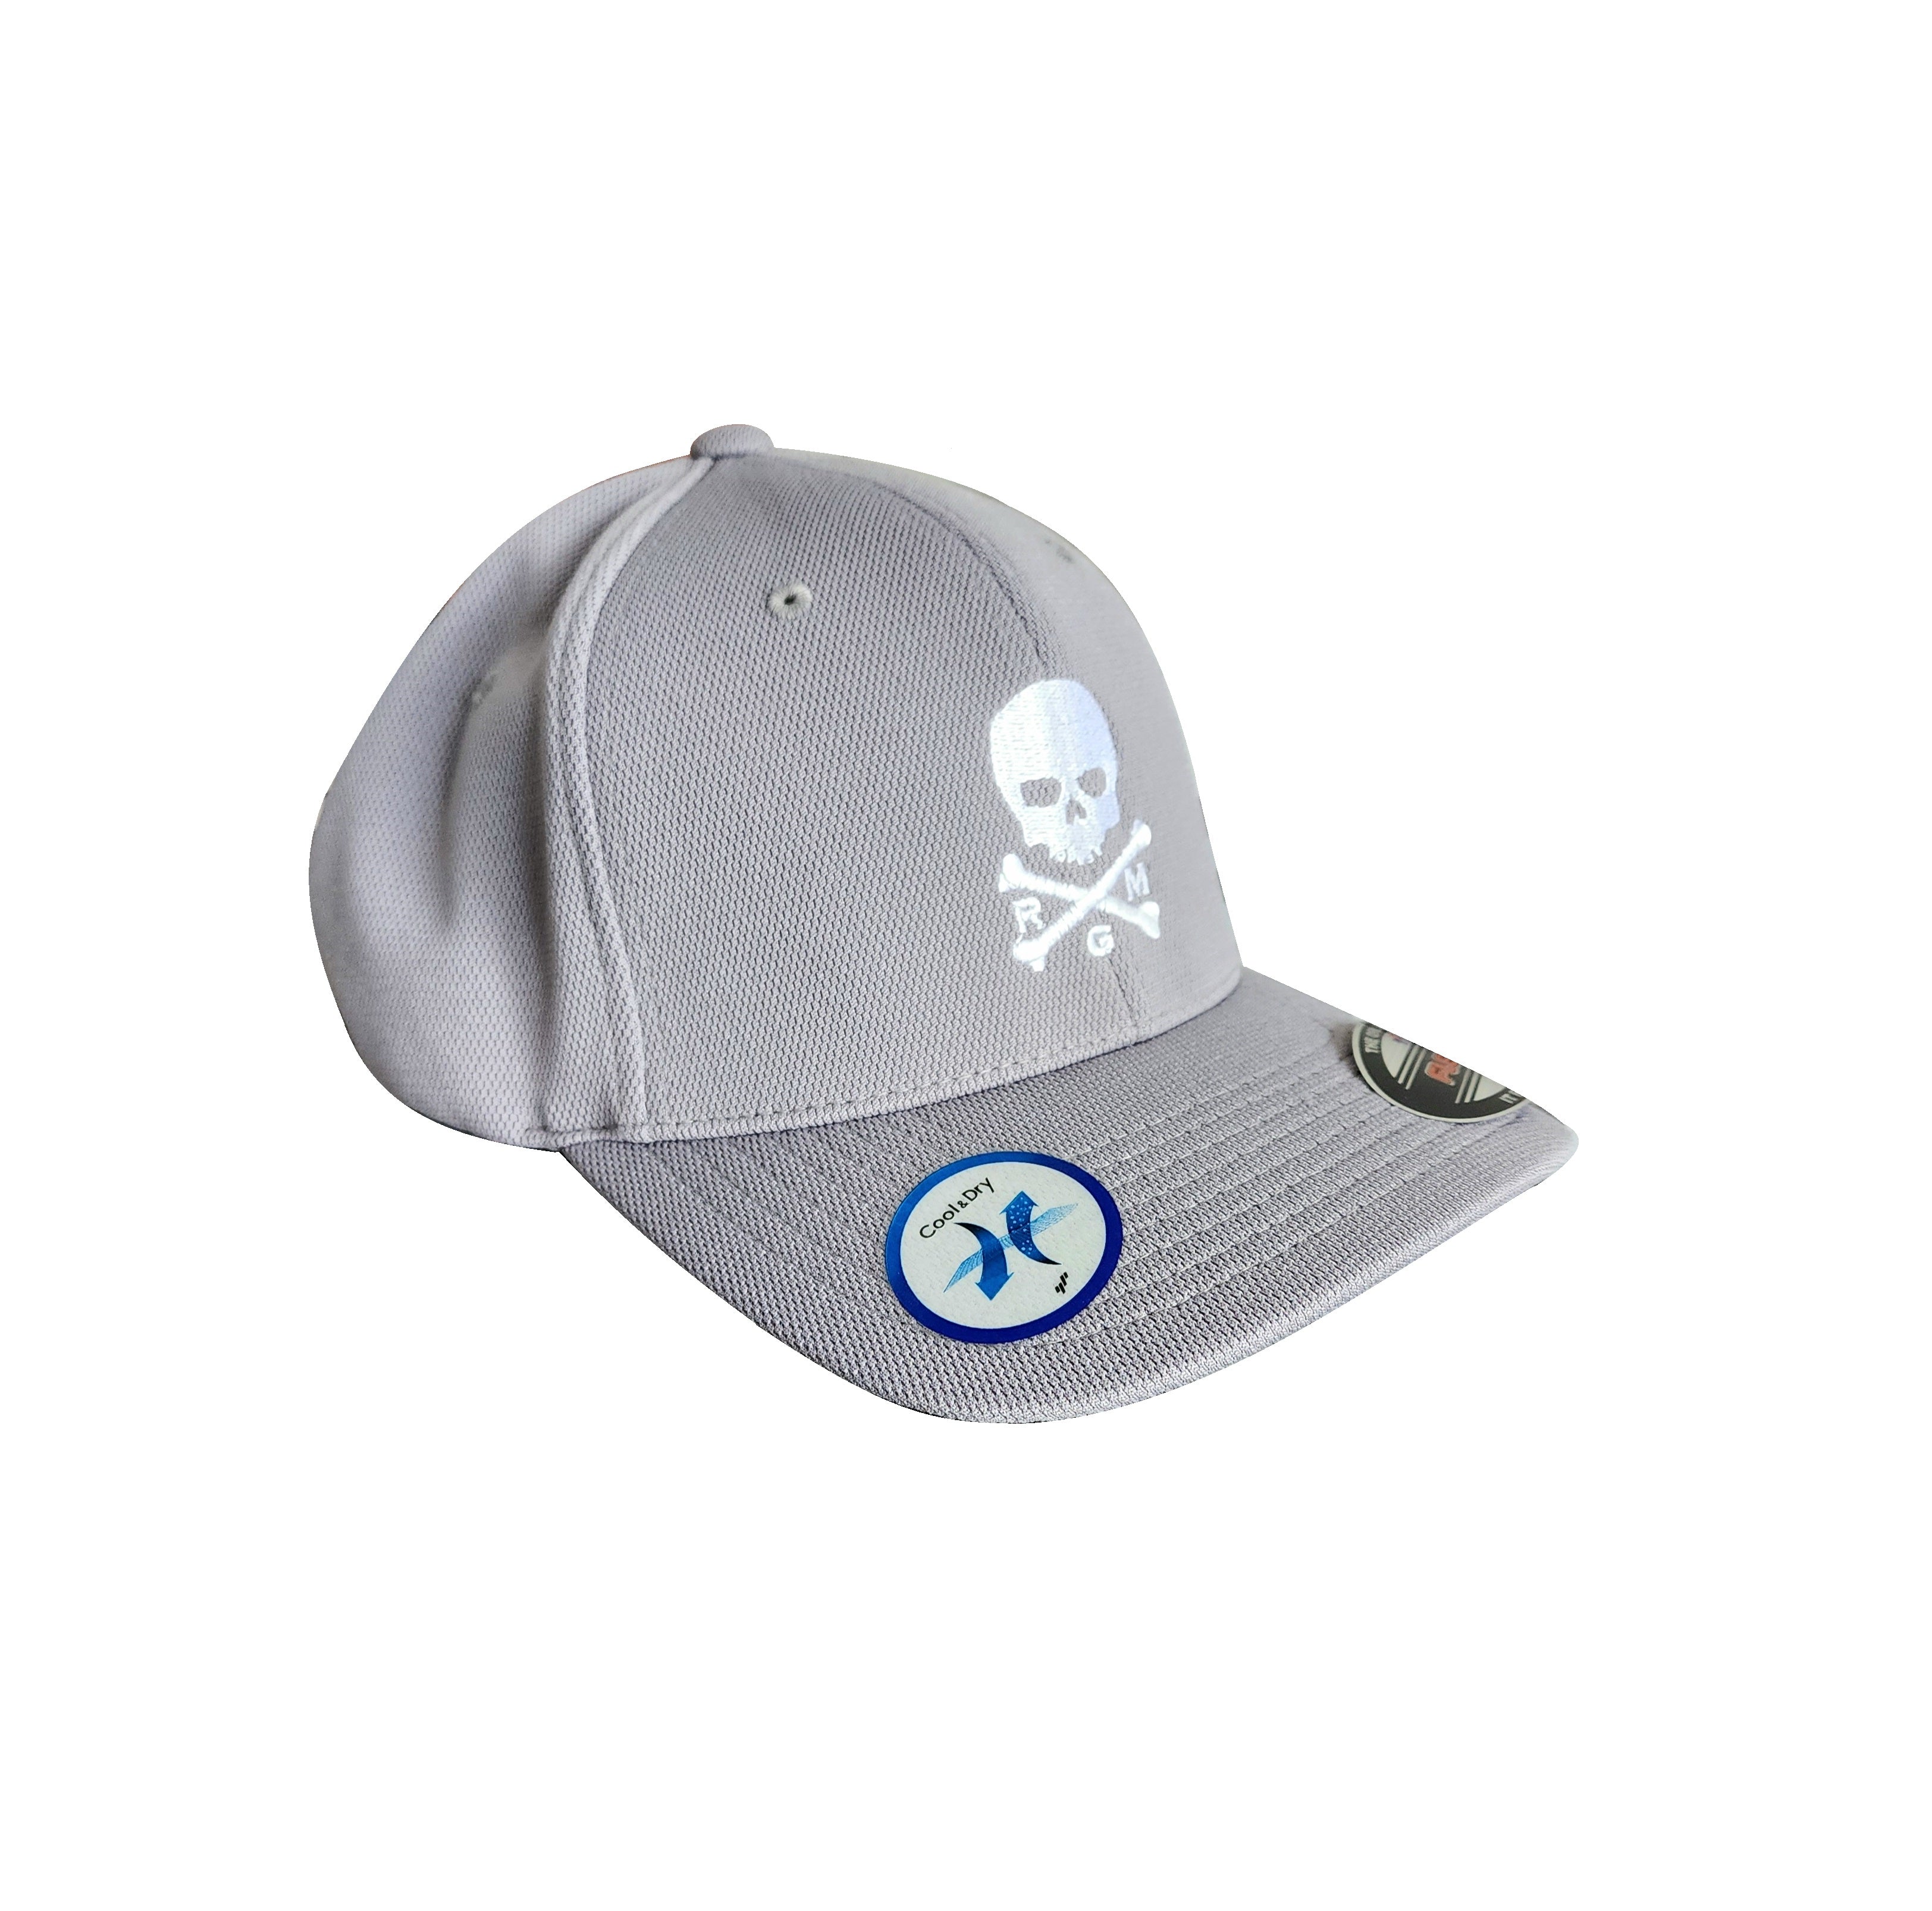 NEW! The RMG Signature Grey Flexfit Baseball Hat - Robert Mark Golf